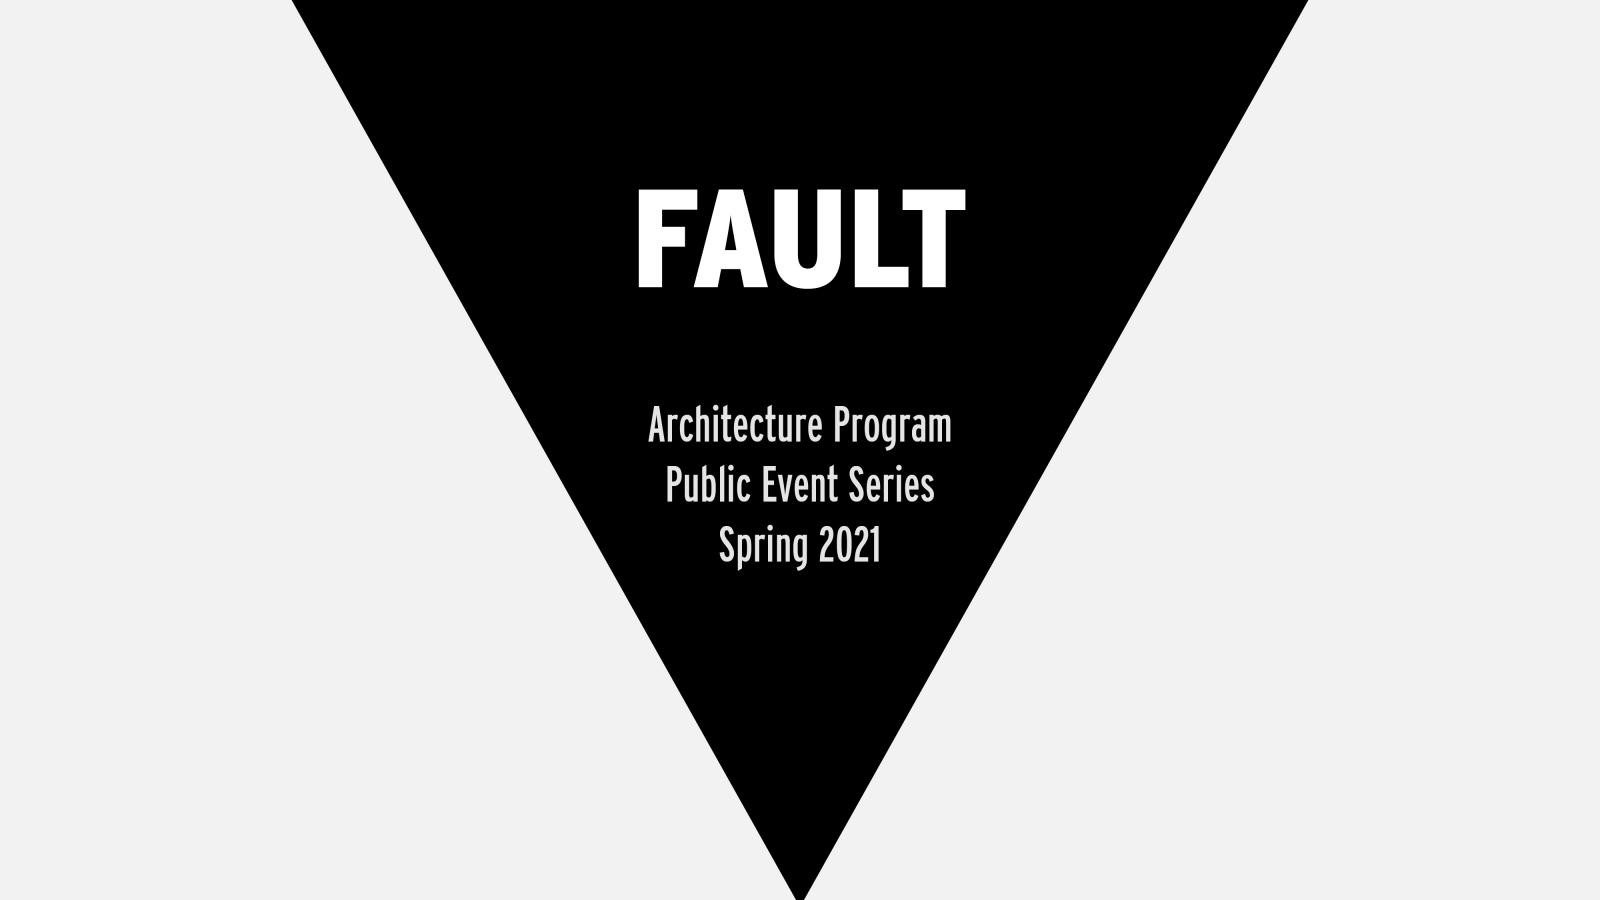 FAULT Architecture Program Public Event Series Spring 2021